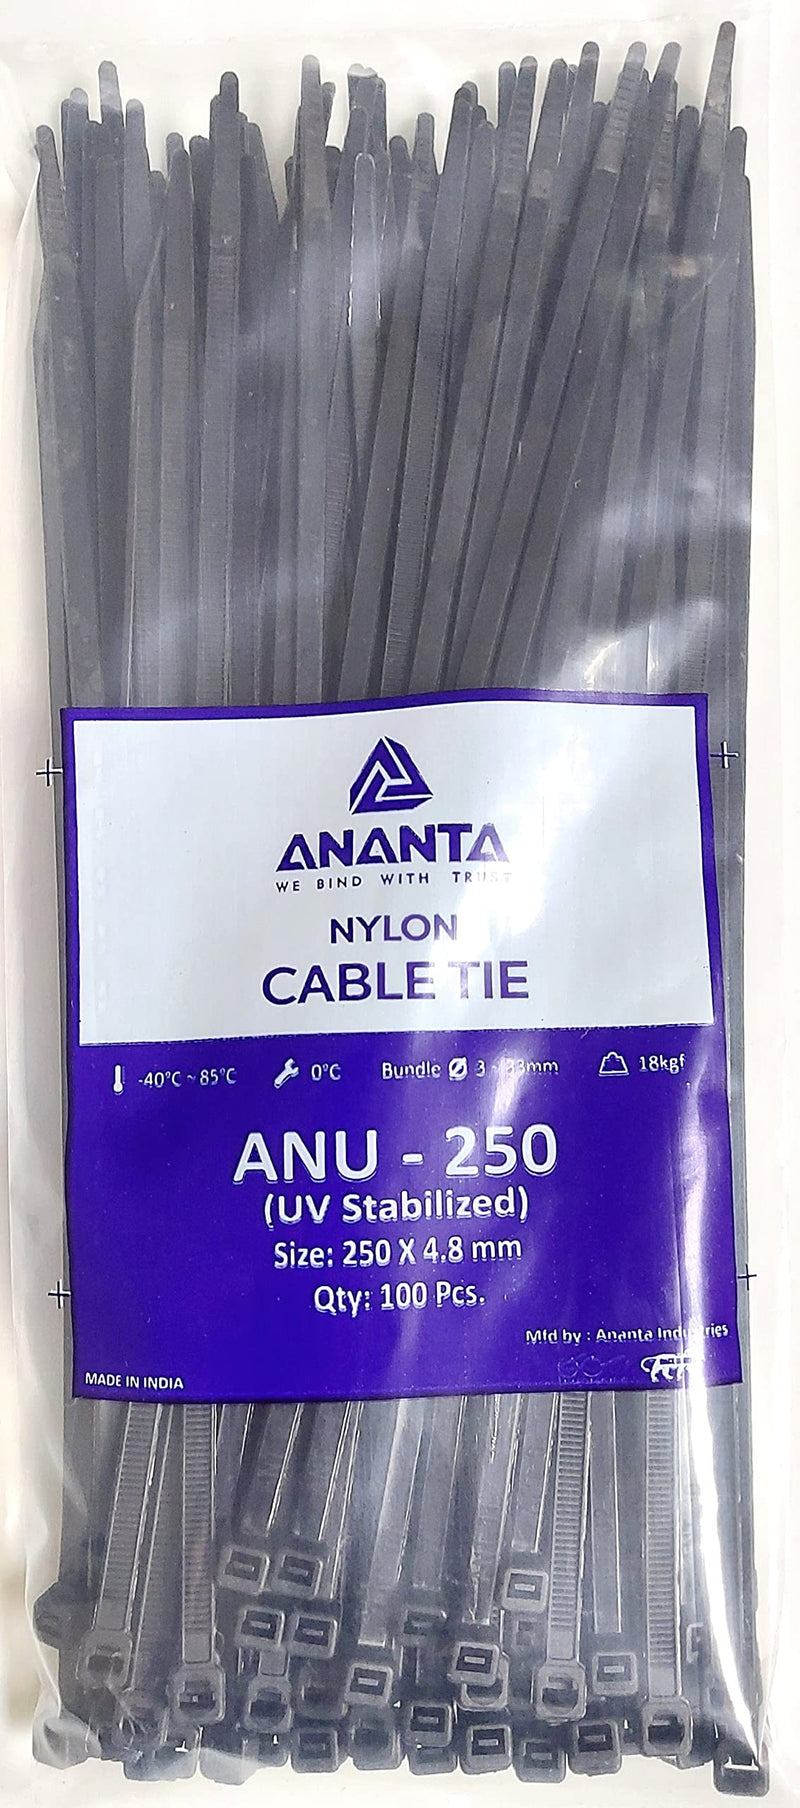  [AUSTRALIA] - ANANTA INDUSTRIES Multi-Purpose UV Resistant Heavy Duty Black Cable Ties, 10 INCH[250MM], Pack Of 100… 10"(250MM) UV BLACK